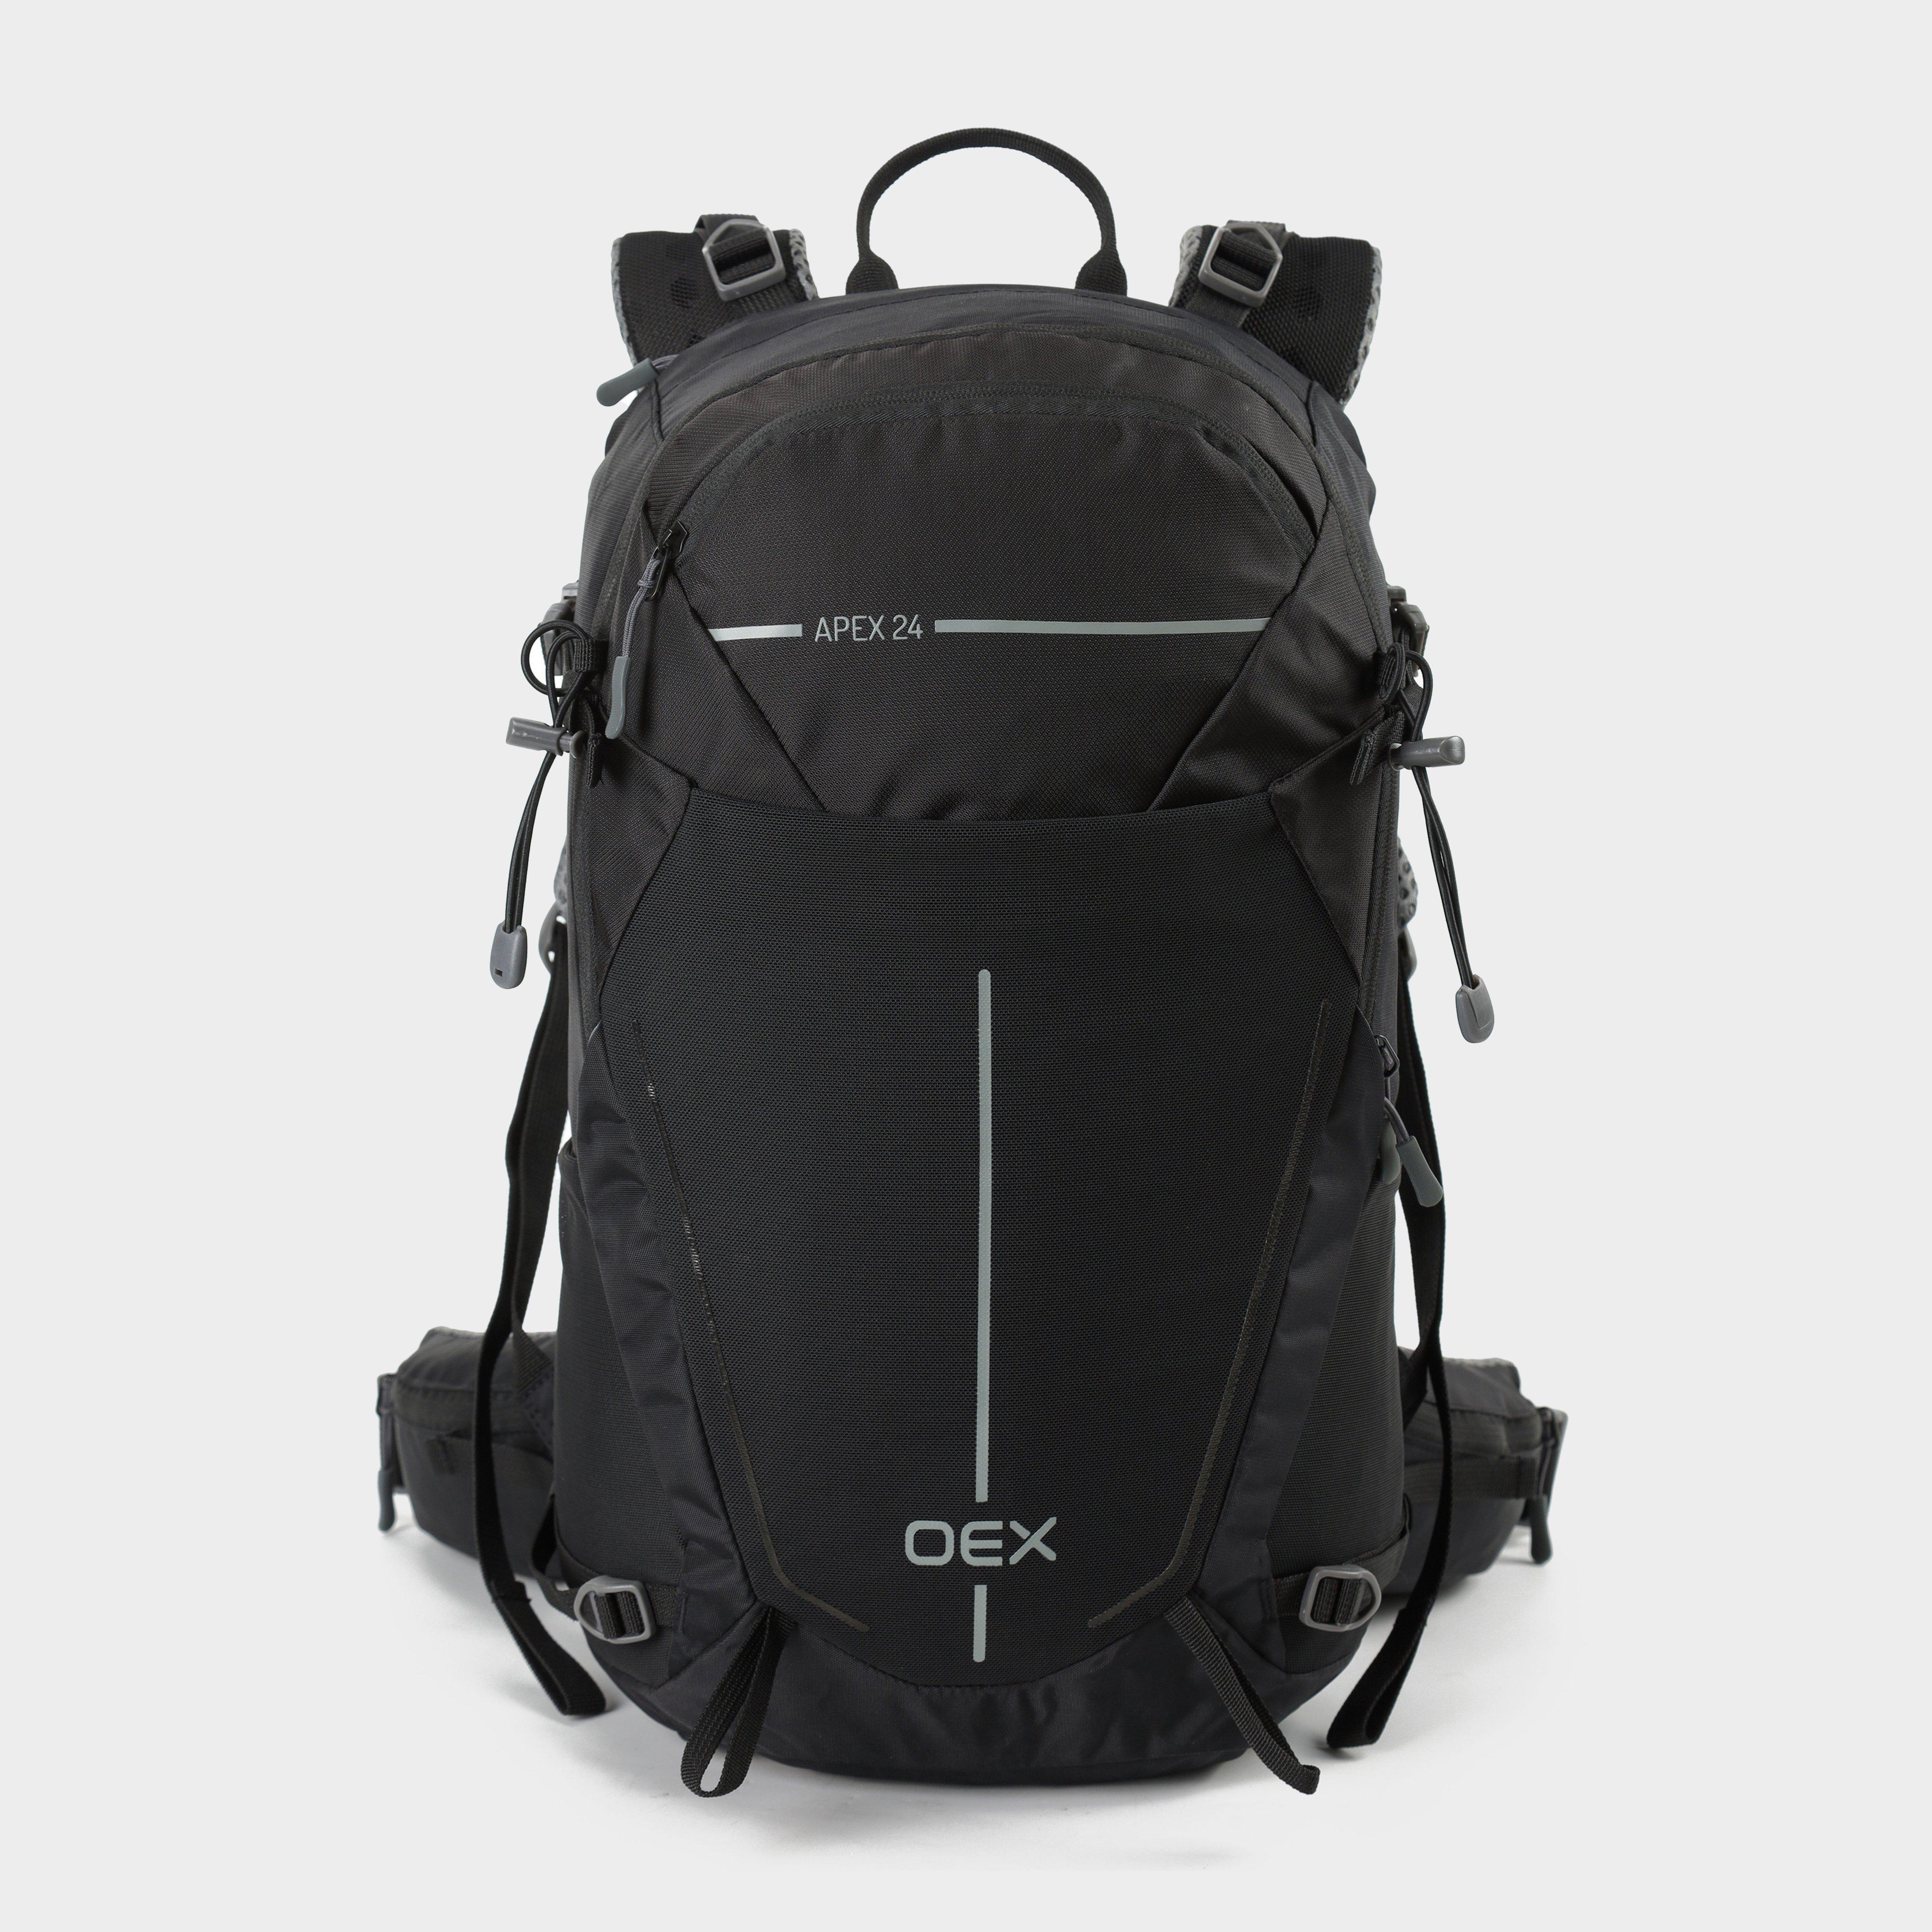  OEX Apex 24L Backpack